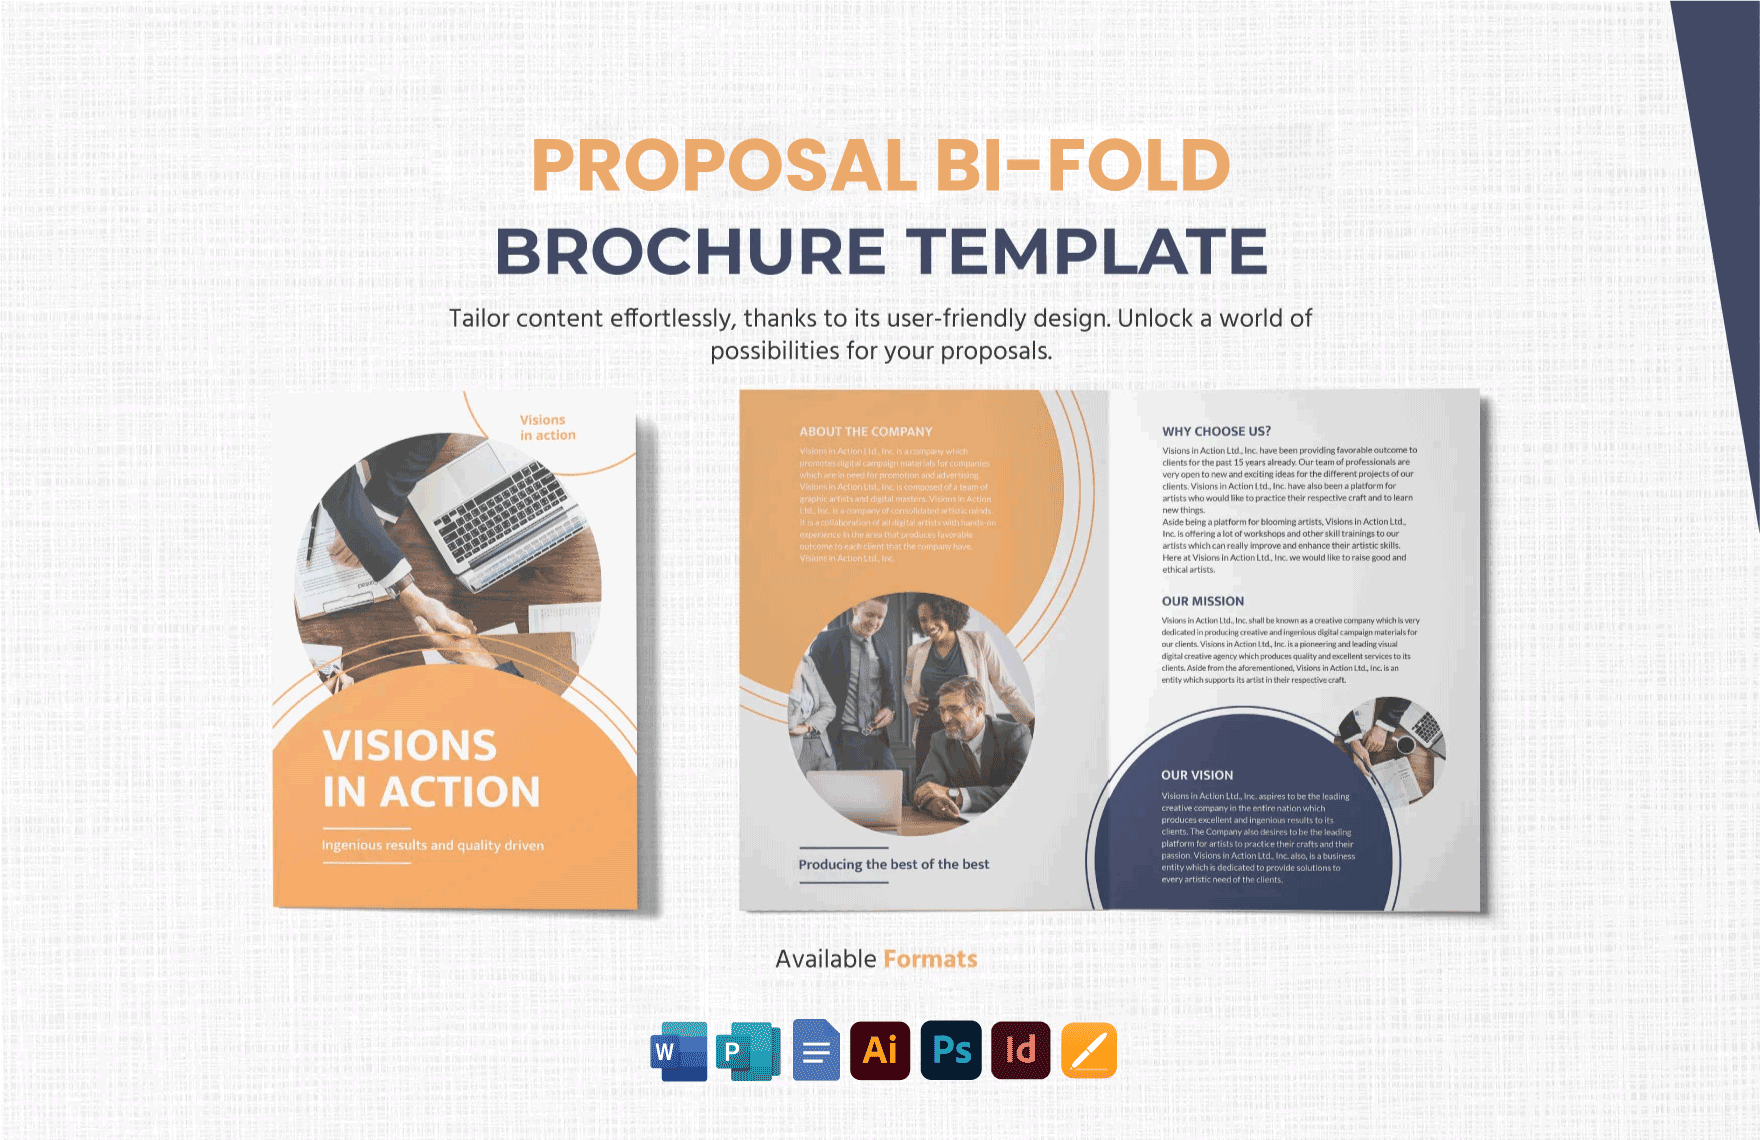 Free Proposal Bi-Fold Brochure Template in Word, Google Docs, Illustrator, PSD, Apple Pages, Publisher, InDesign